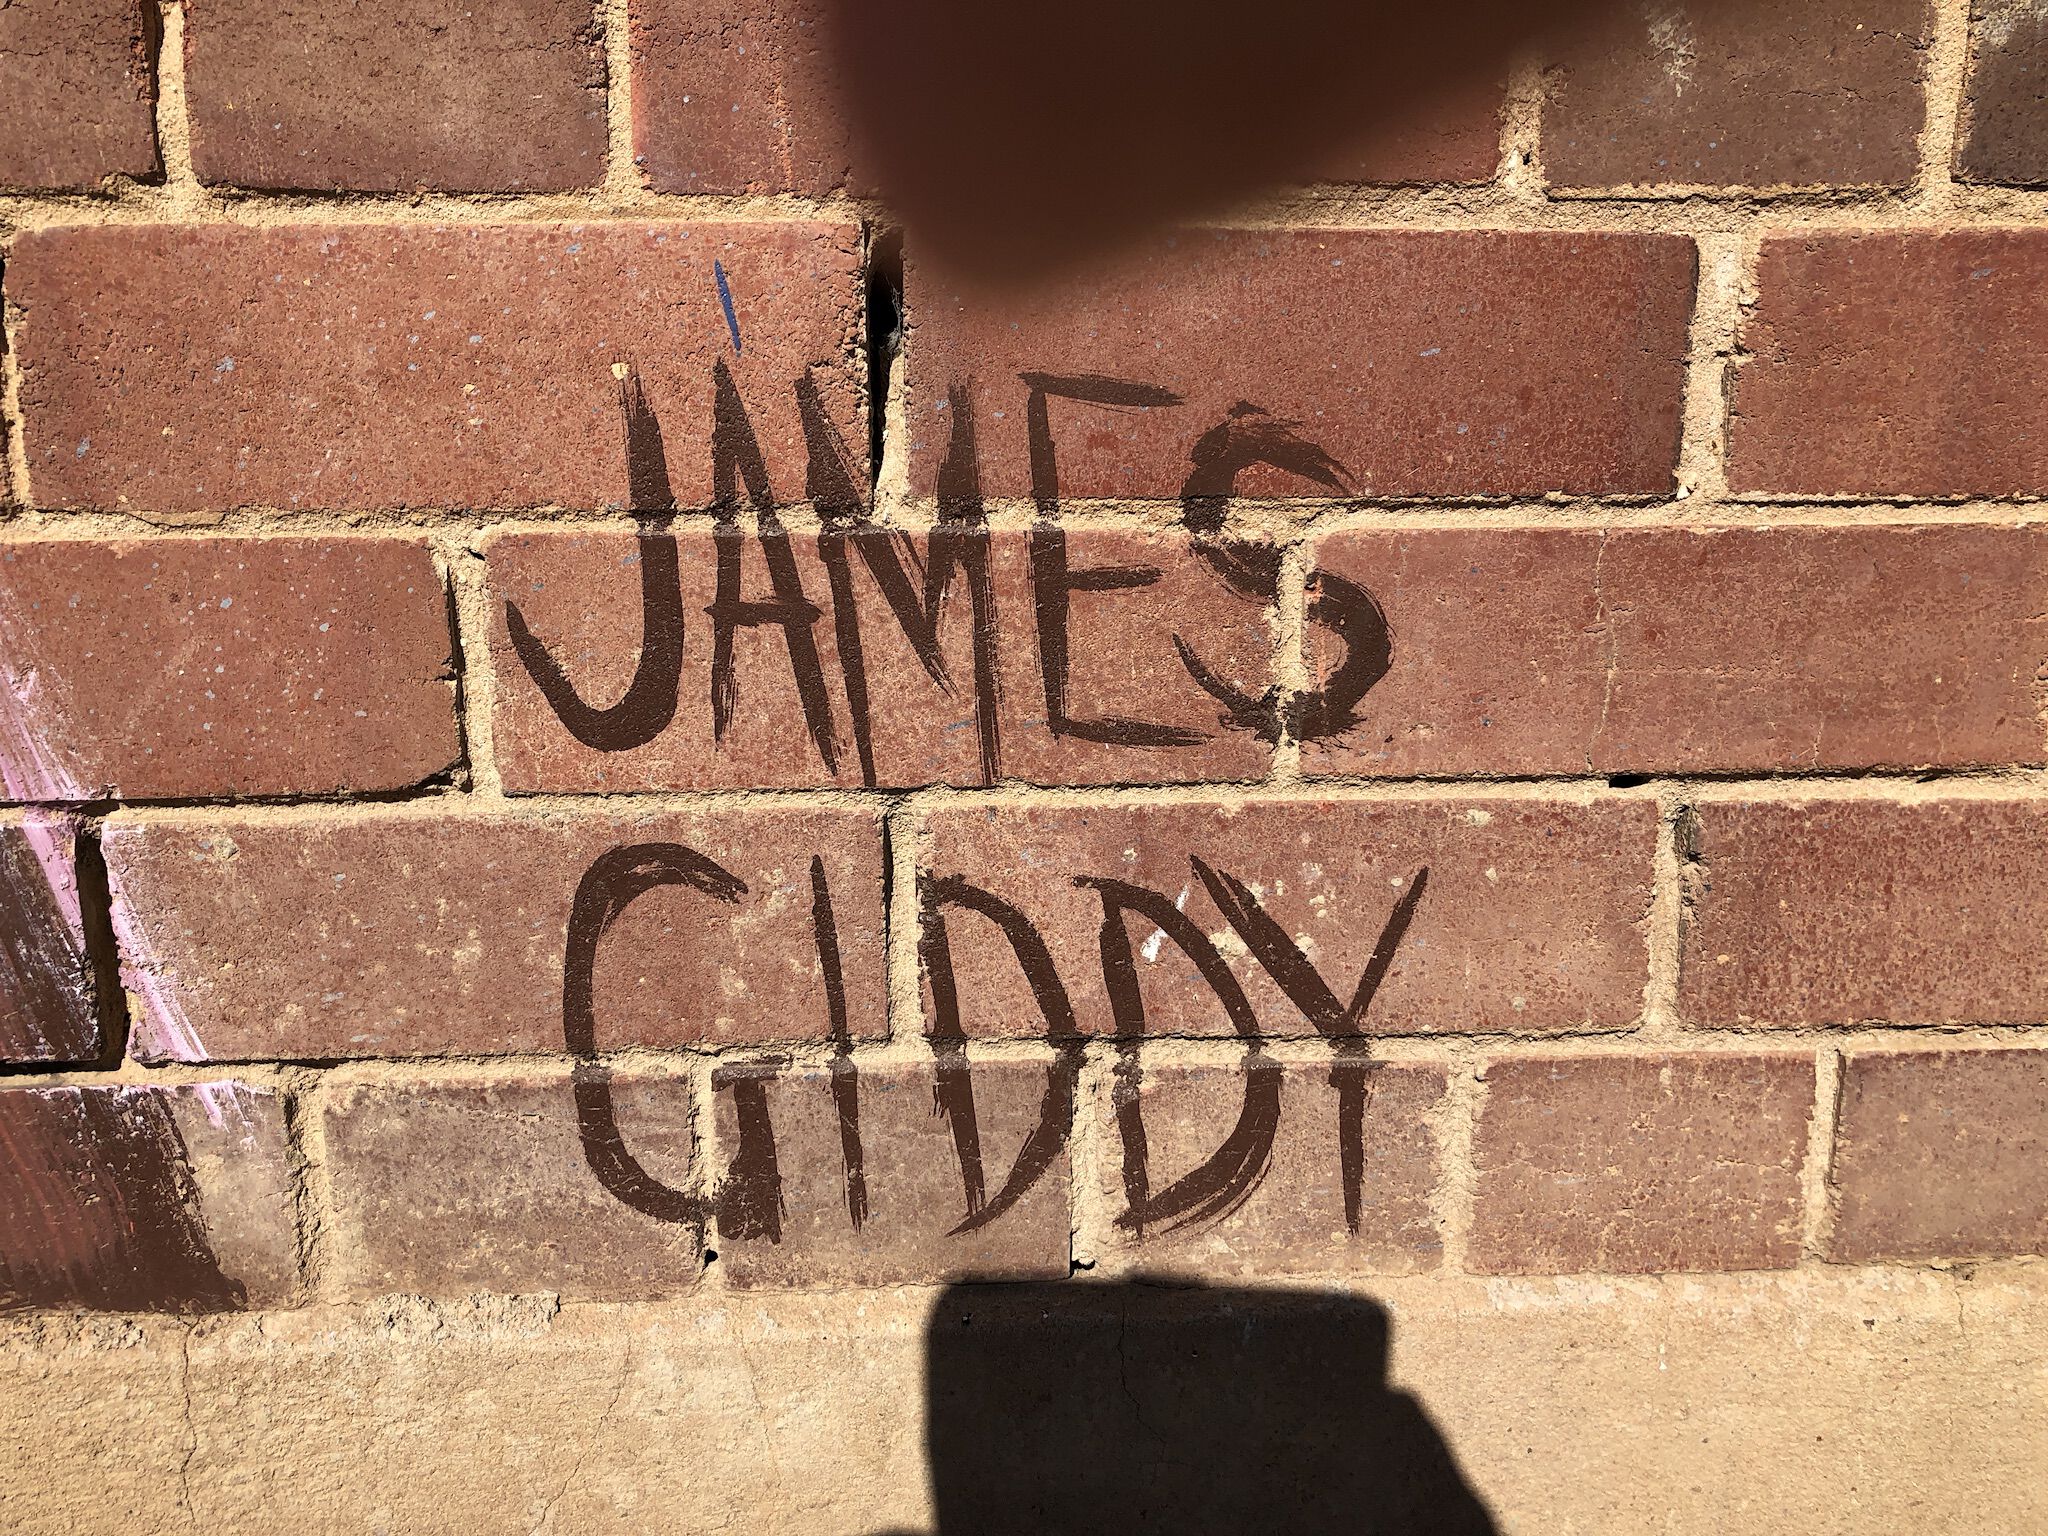 James Giddy&mdash;Untitled